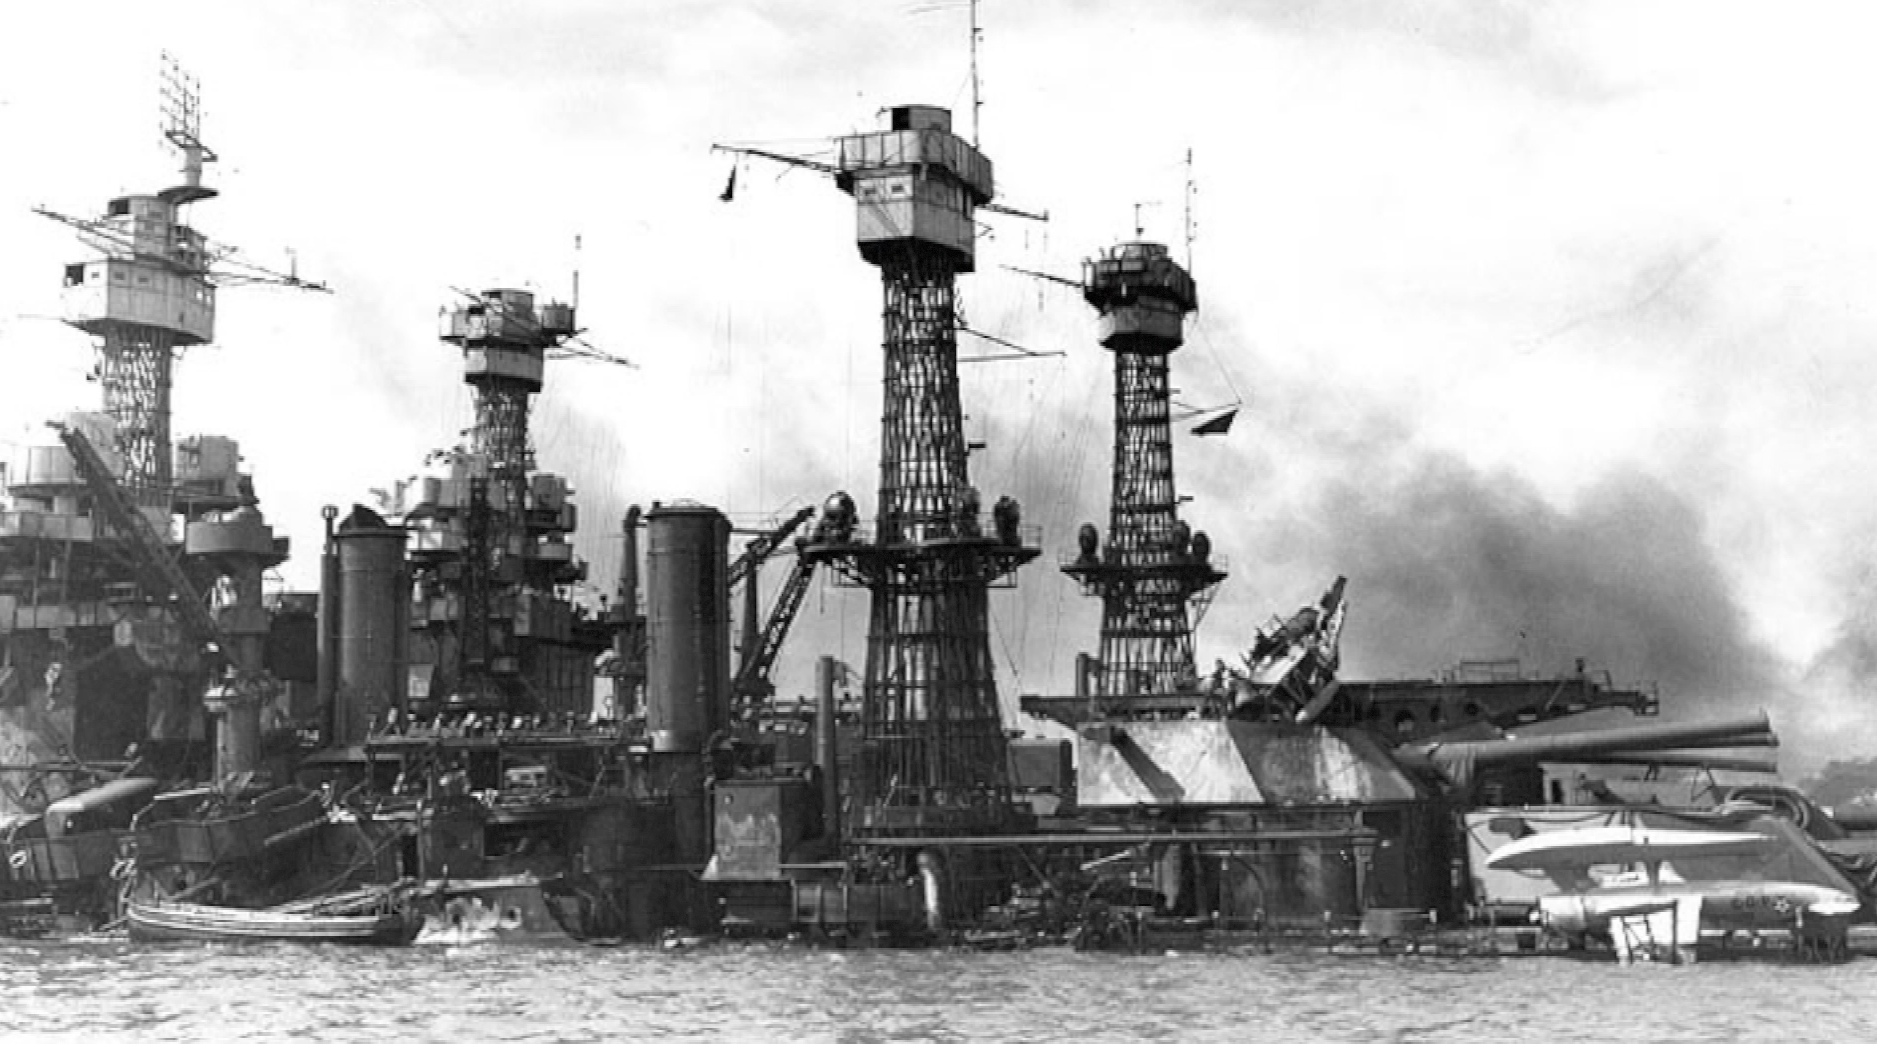 Pearl Harbor on Dec. 7, 1941